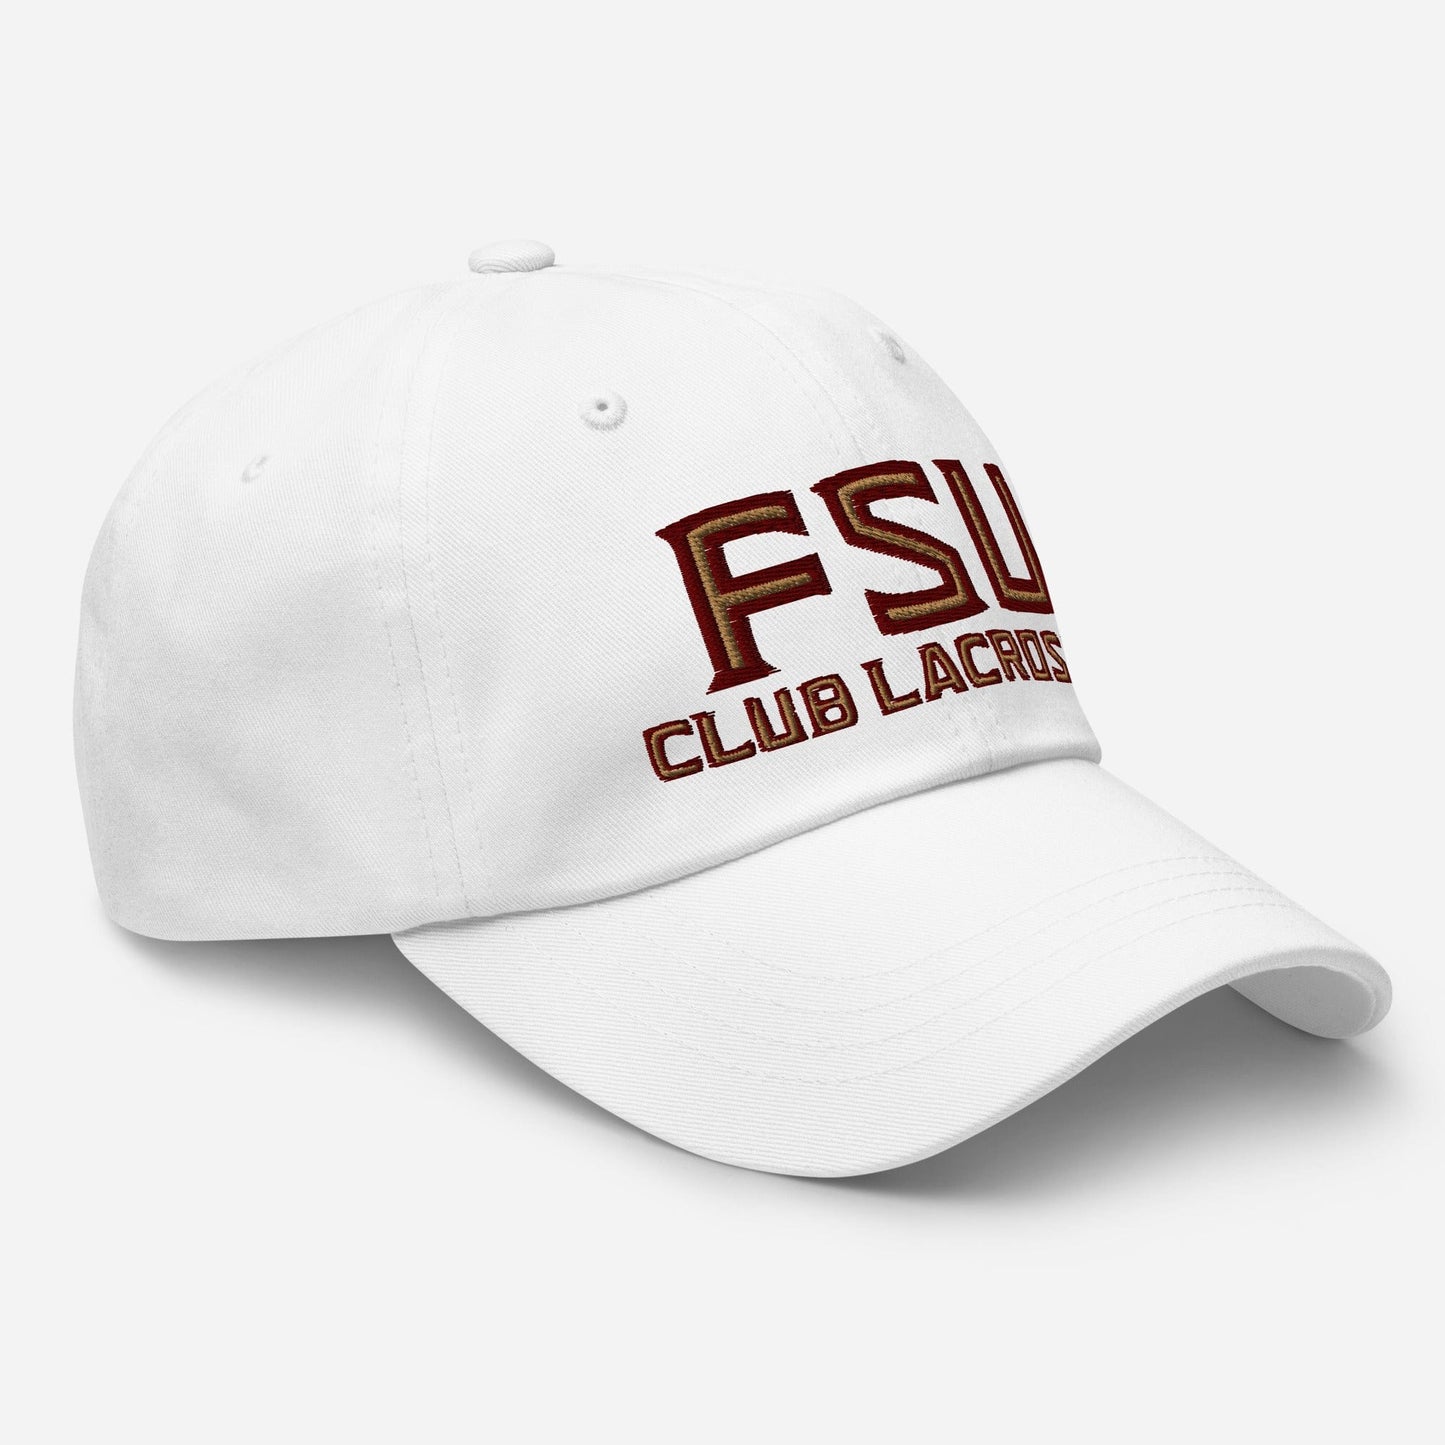 FSU Club Lacrosse Adult Dad Hat Signature Lacrosse